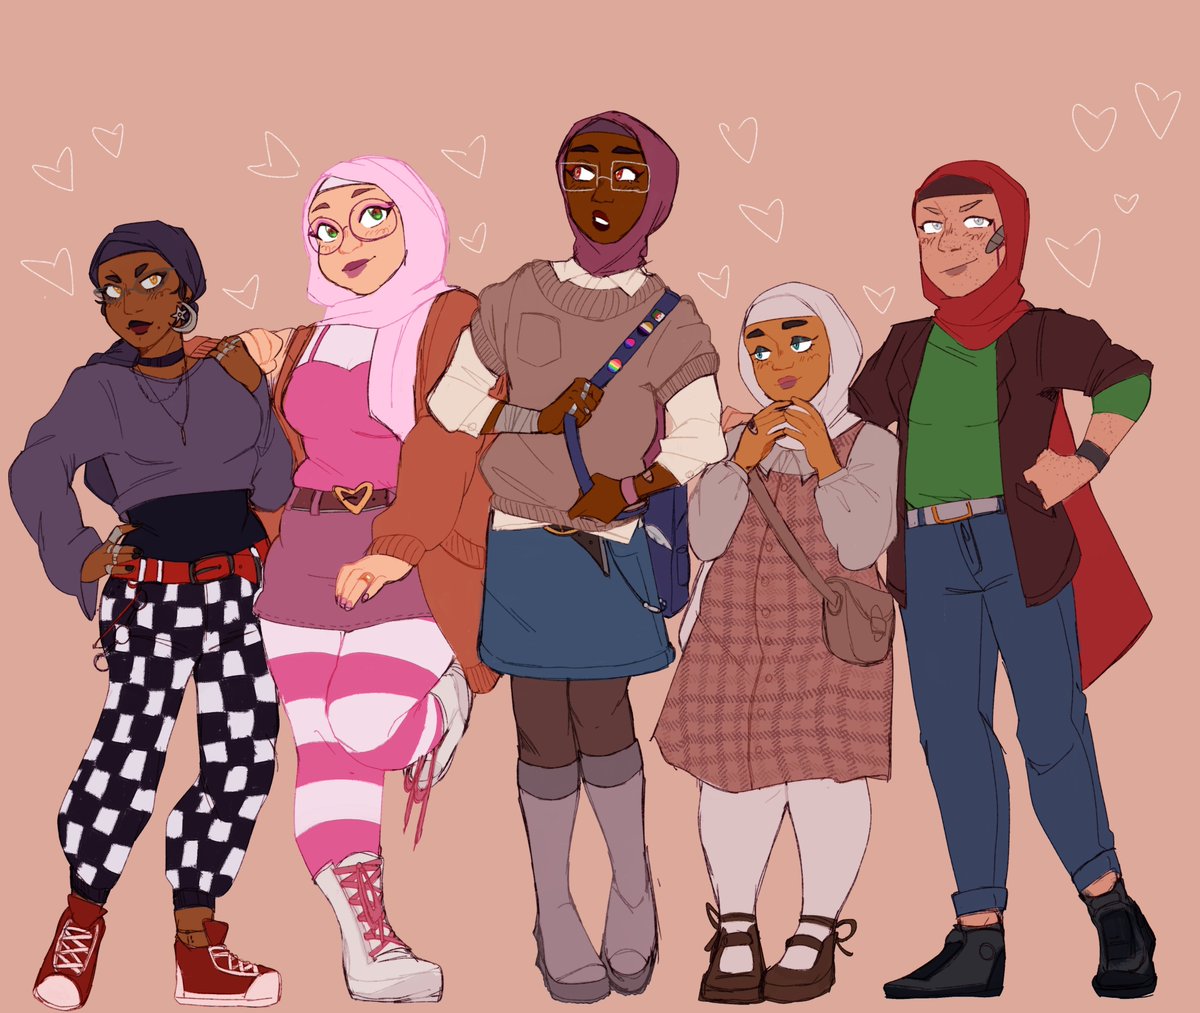 RT @aenimositi: hijabis with diverse styles and bodytypes! https://t.co/UtJALmROVa